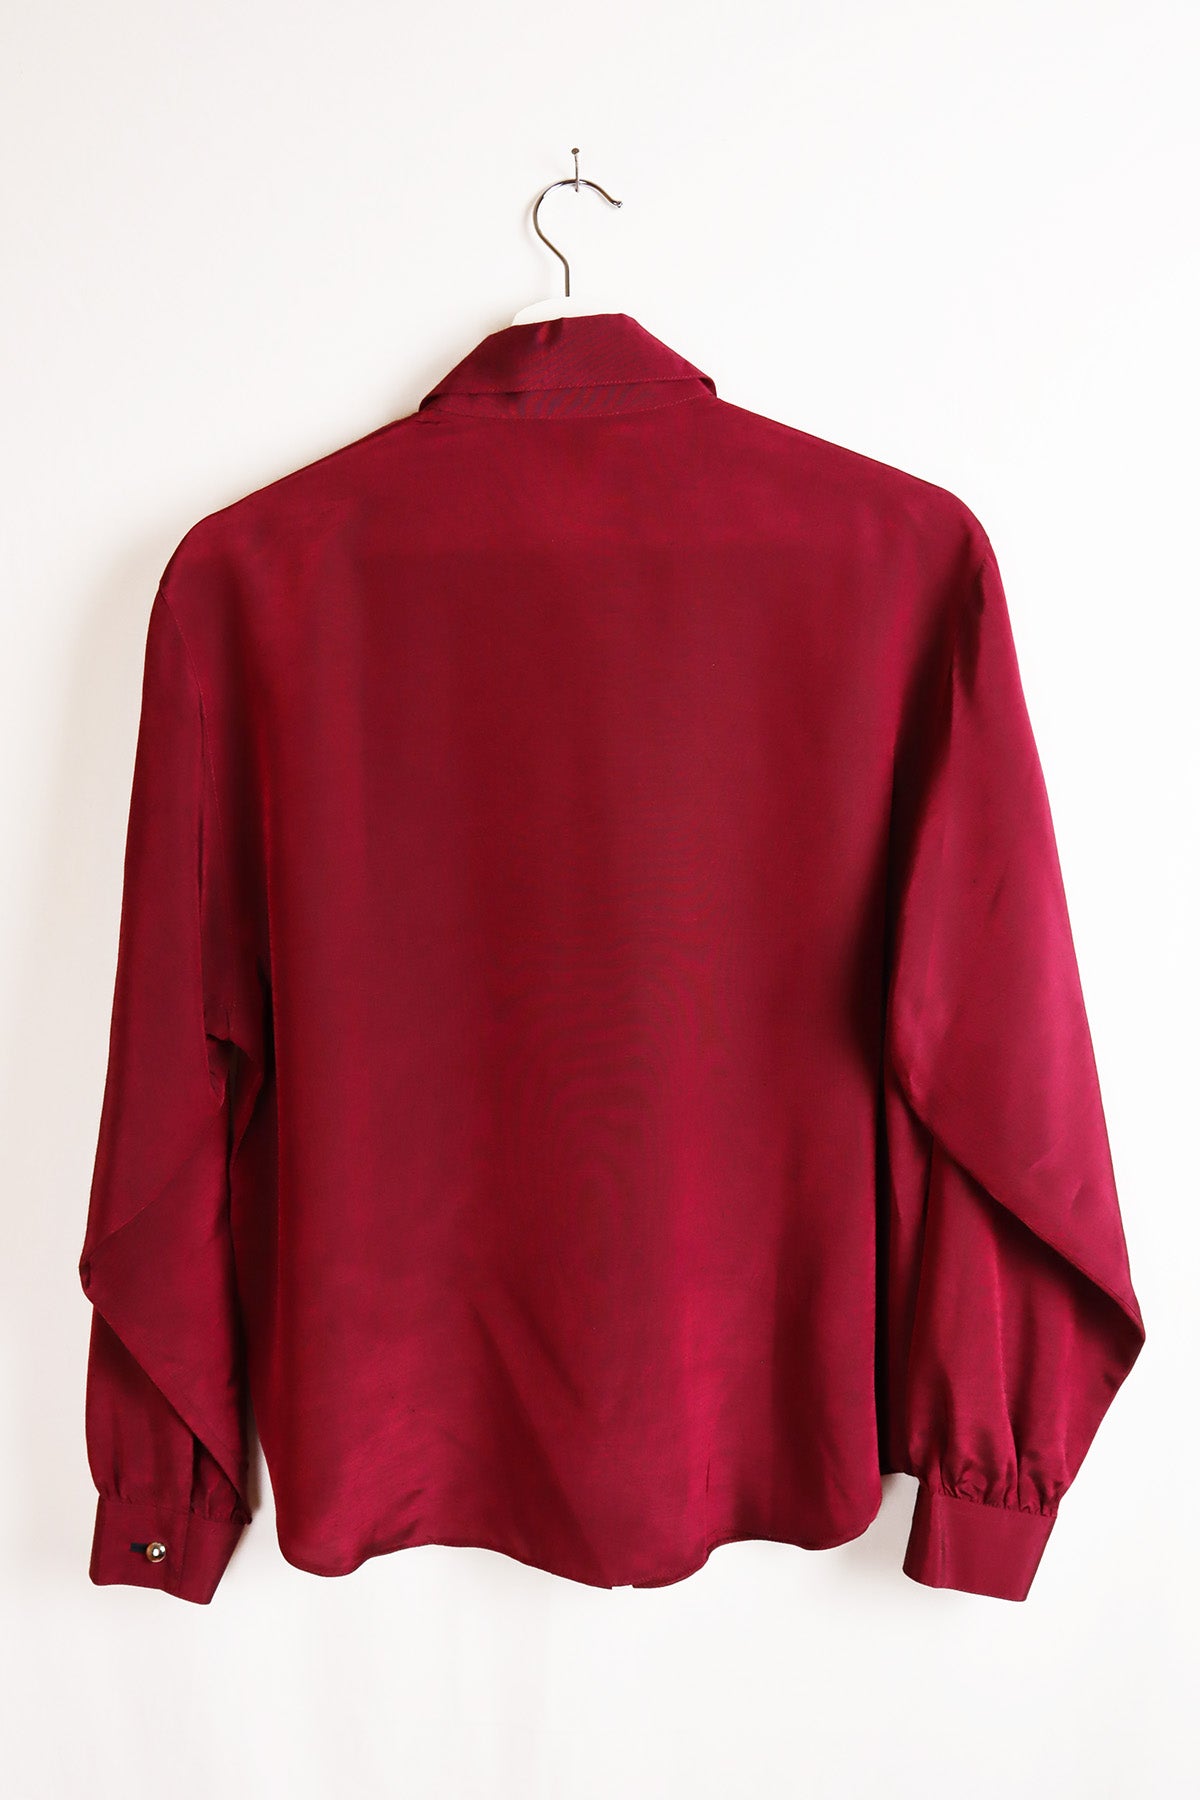 Bluse Vintage Rot Glänzend ( Gr. M )